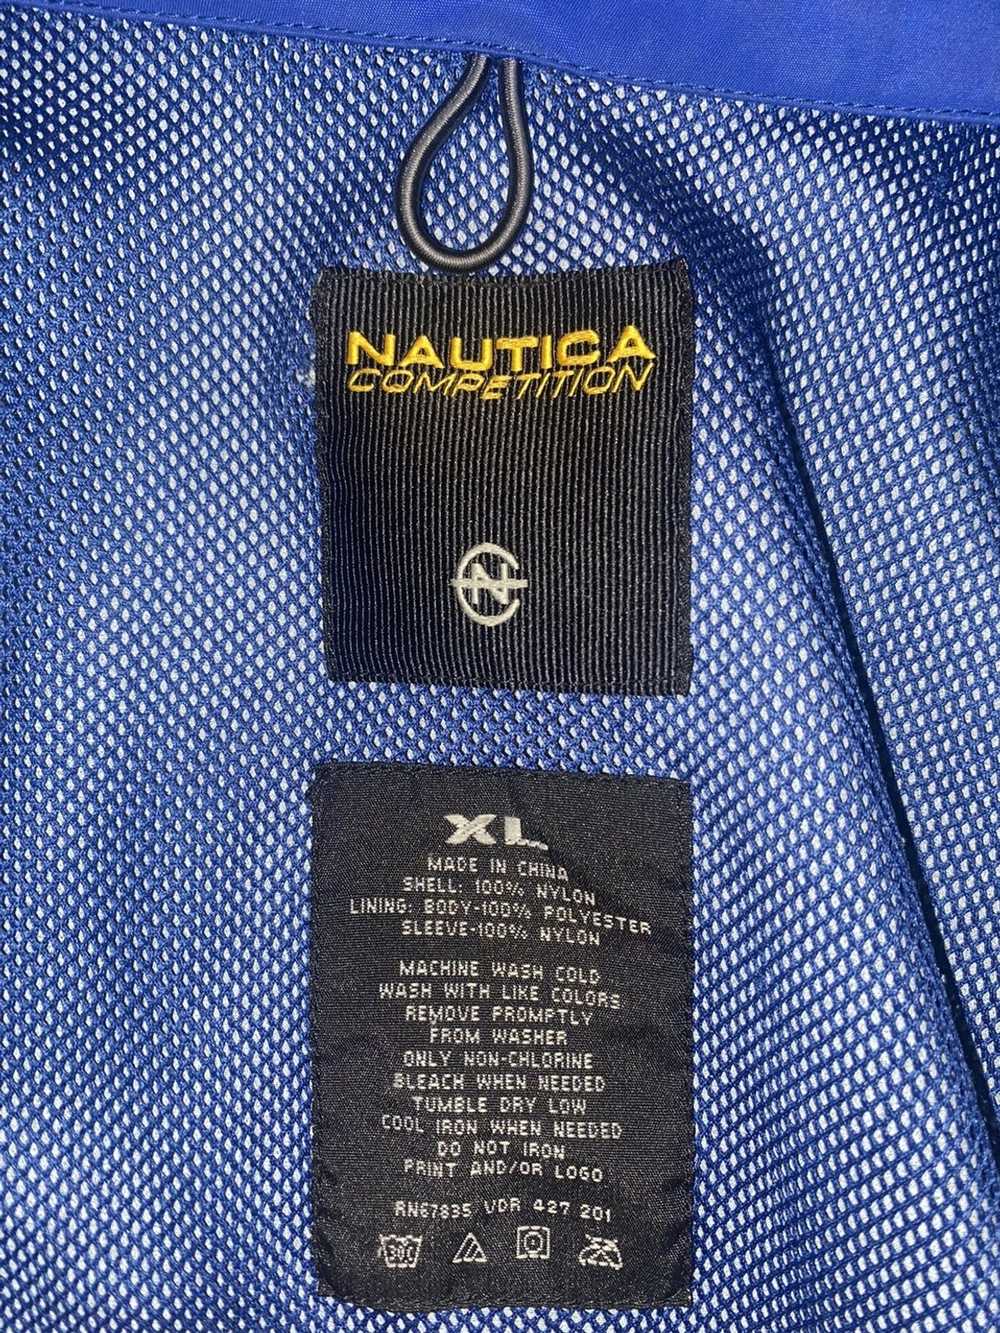 Nautica Nautica Competition jacket - image 6